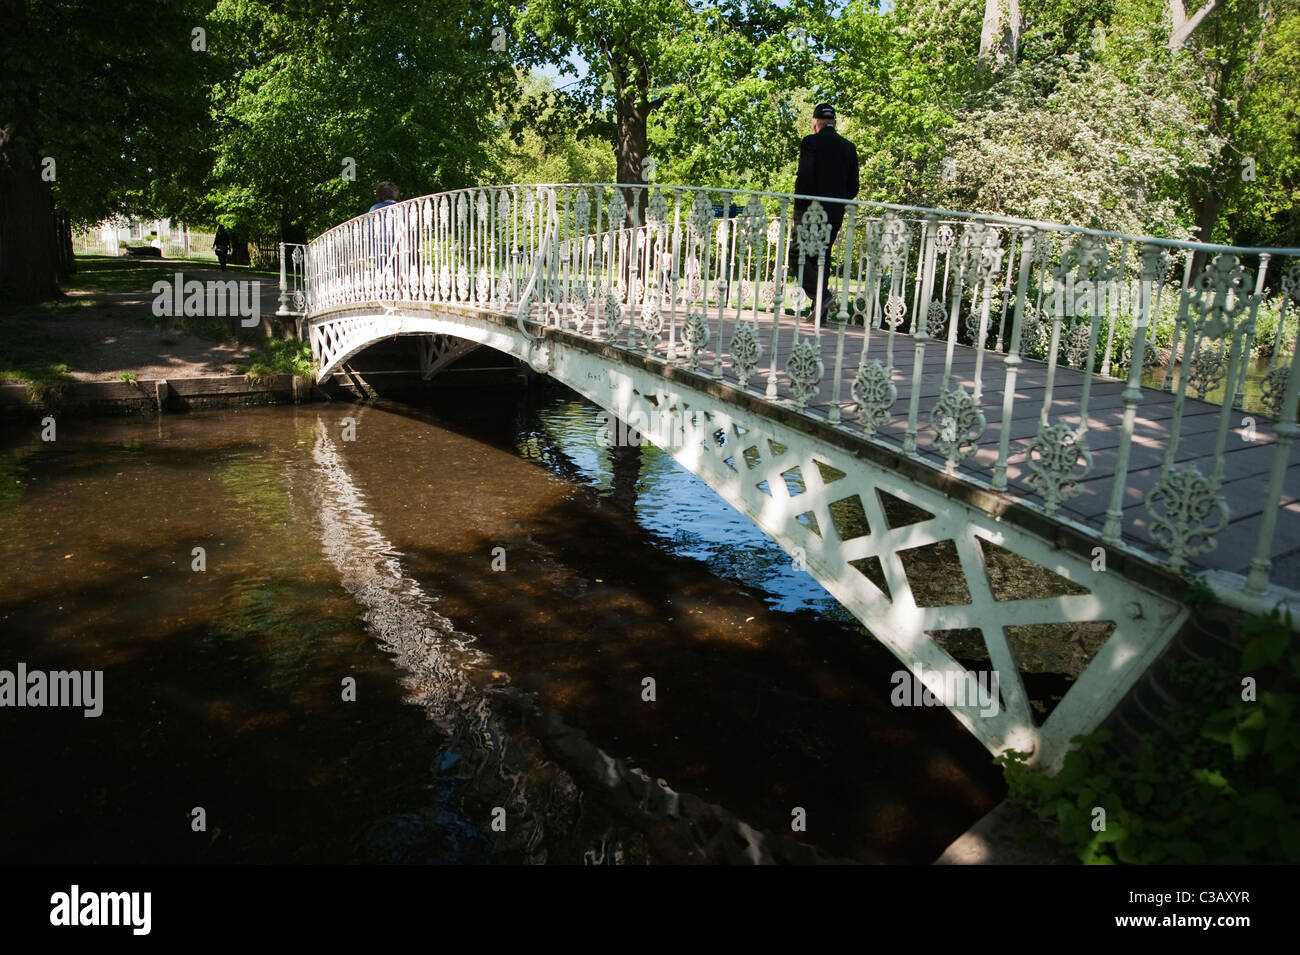 Reich verzierte schmiedeeiserne Brücke überquert den Fluss Wandle in Morden Hall Park Stockfoto